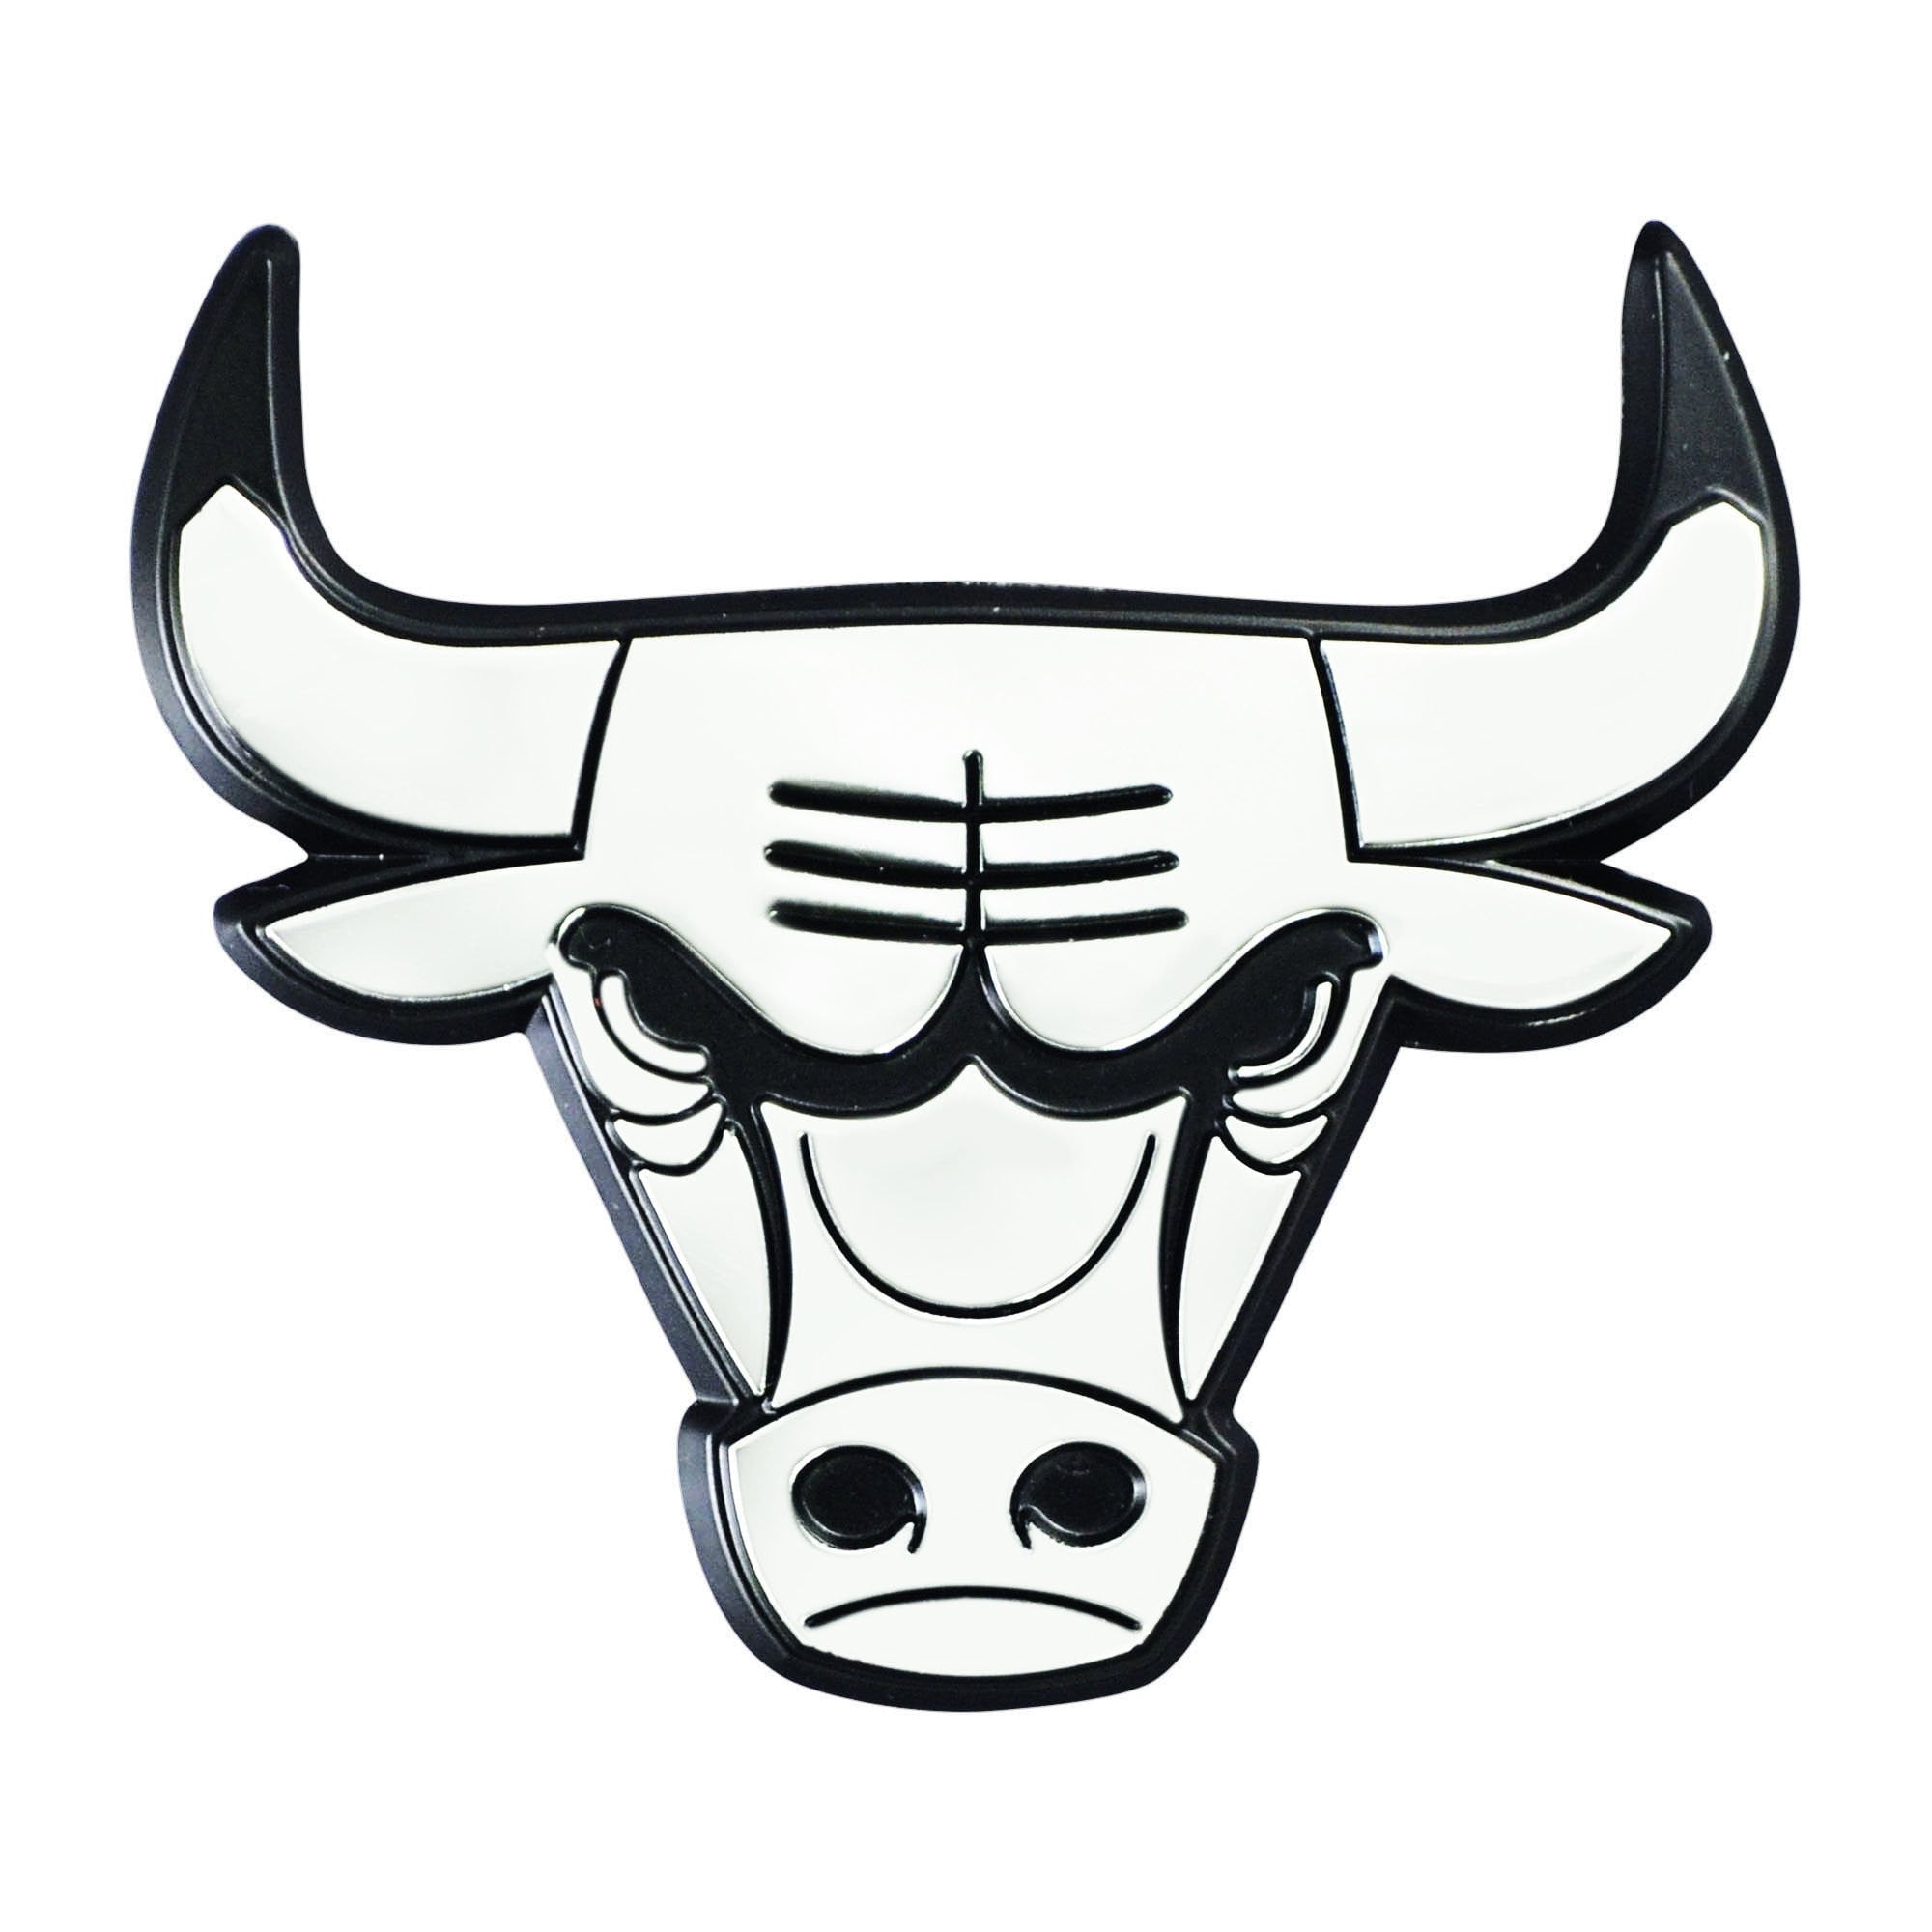 Chicago Bulls 3D Chrome Emblem